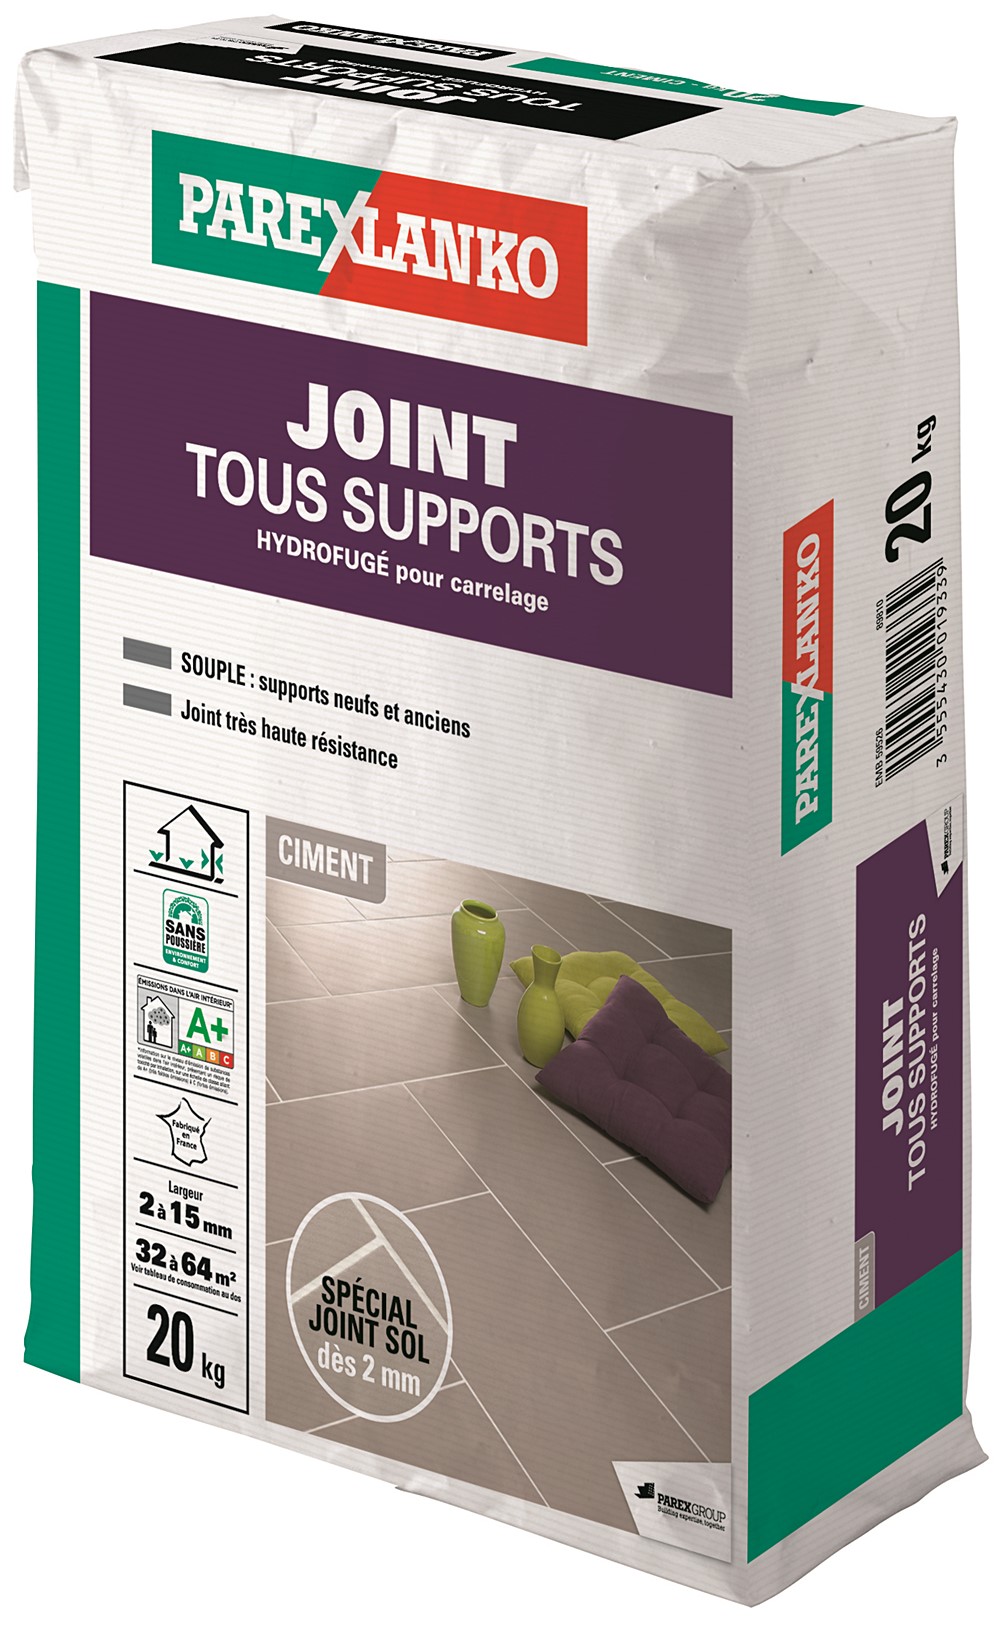 Joint carrelage tous supports ciment 20kg - PAREXLANKO